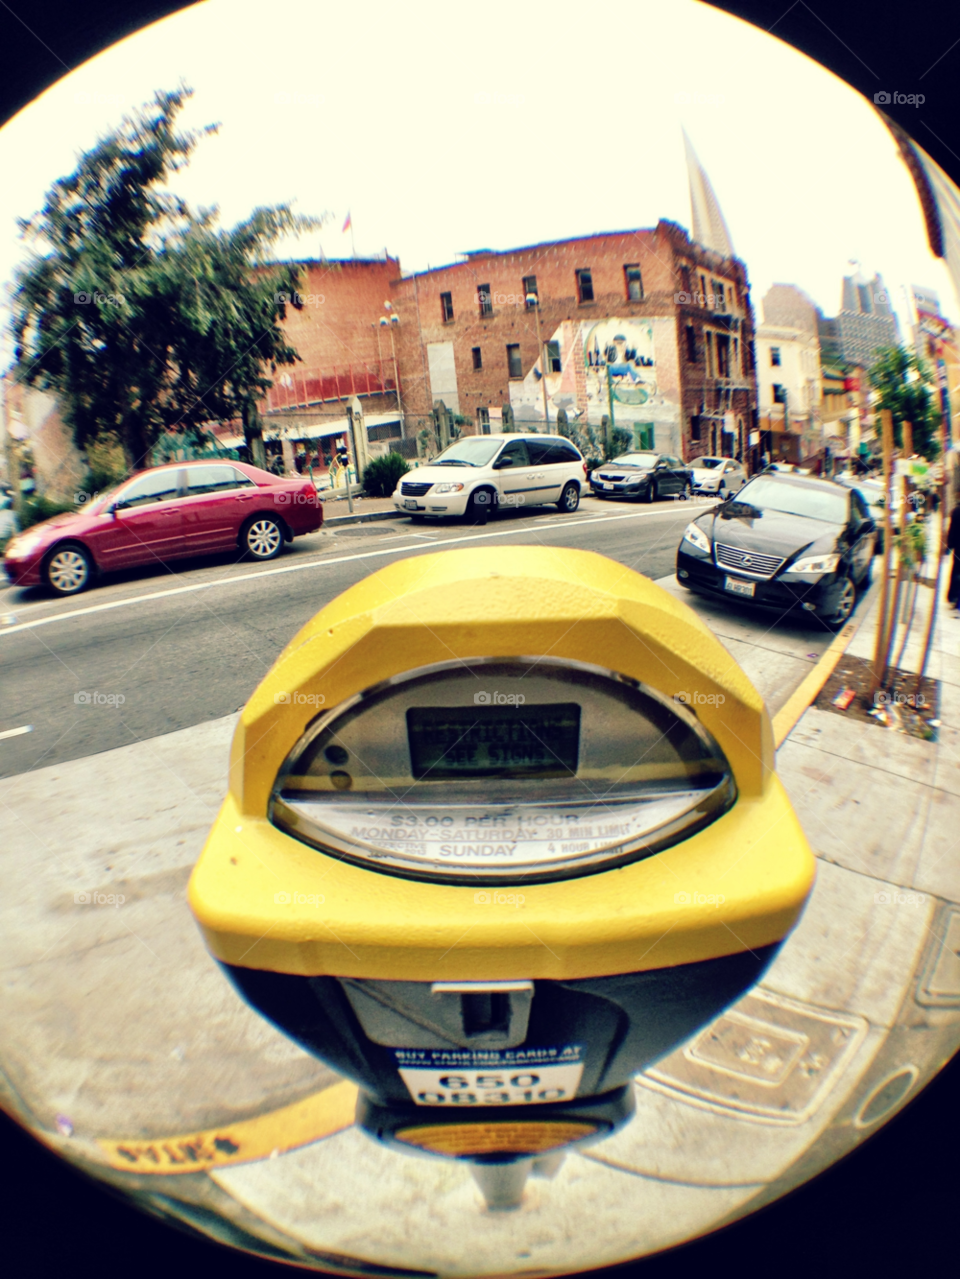 street yellow car parking by gene916